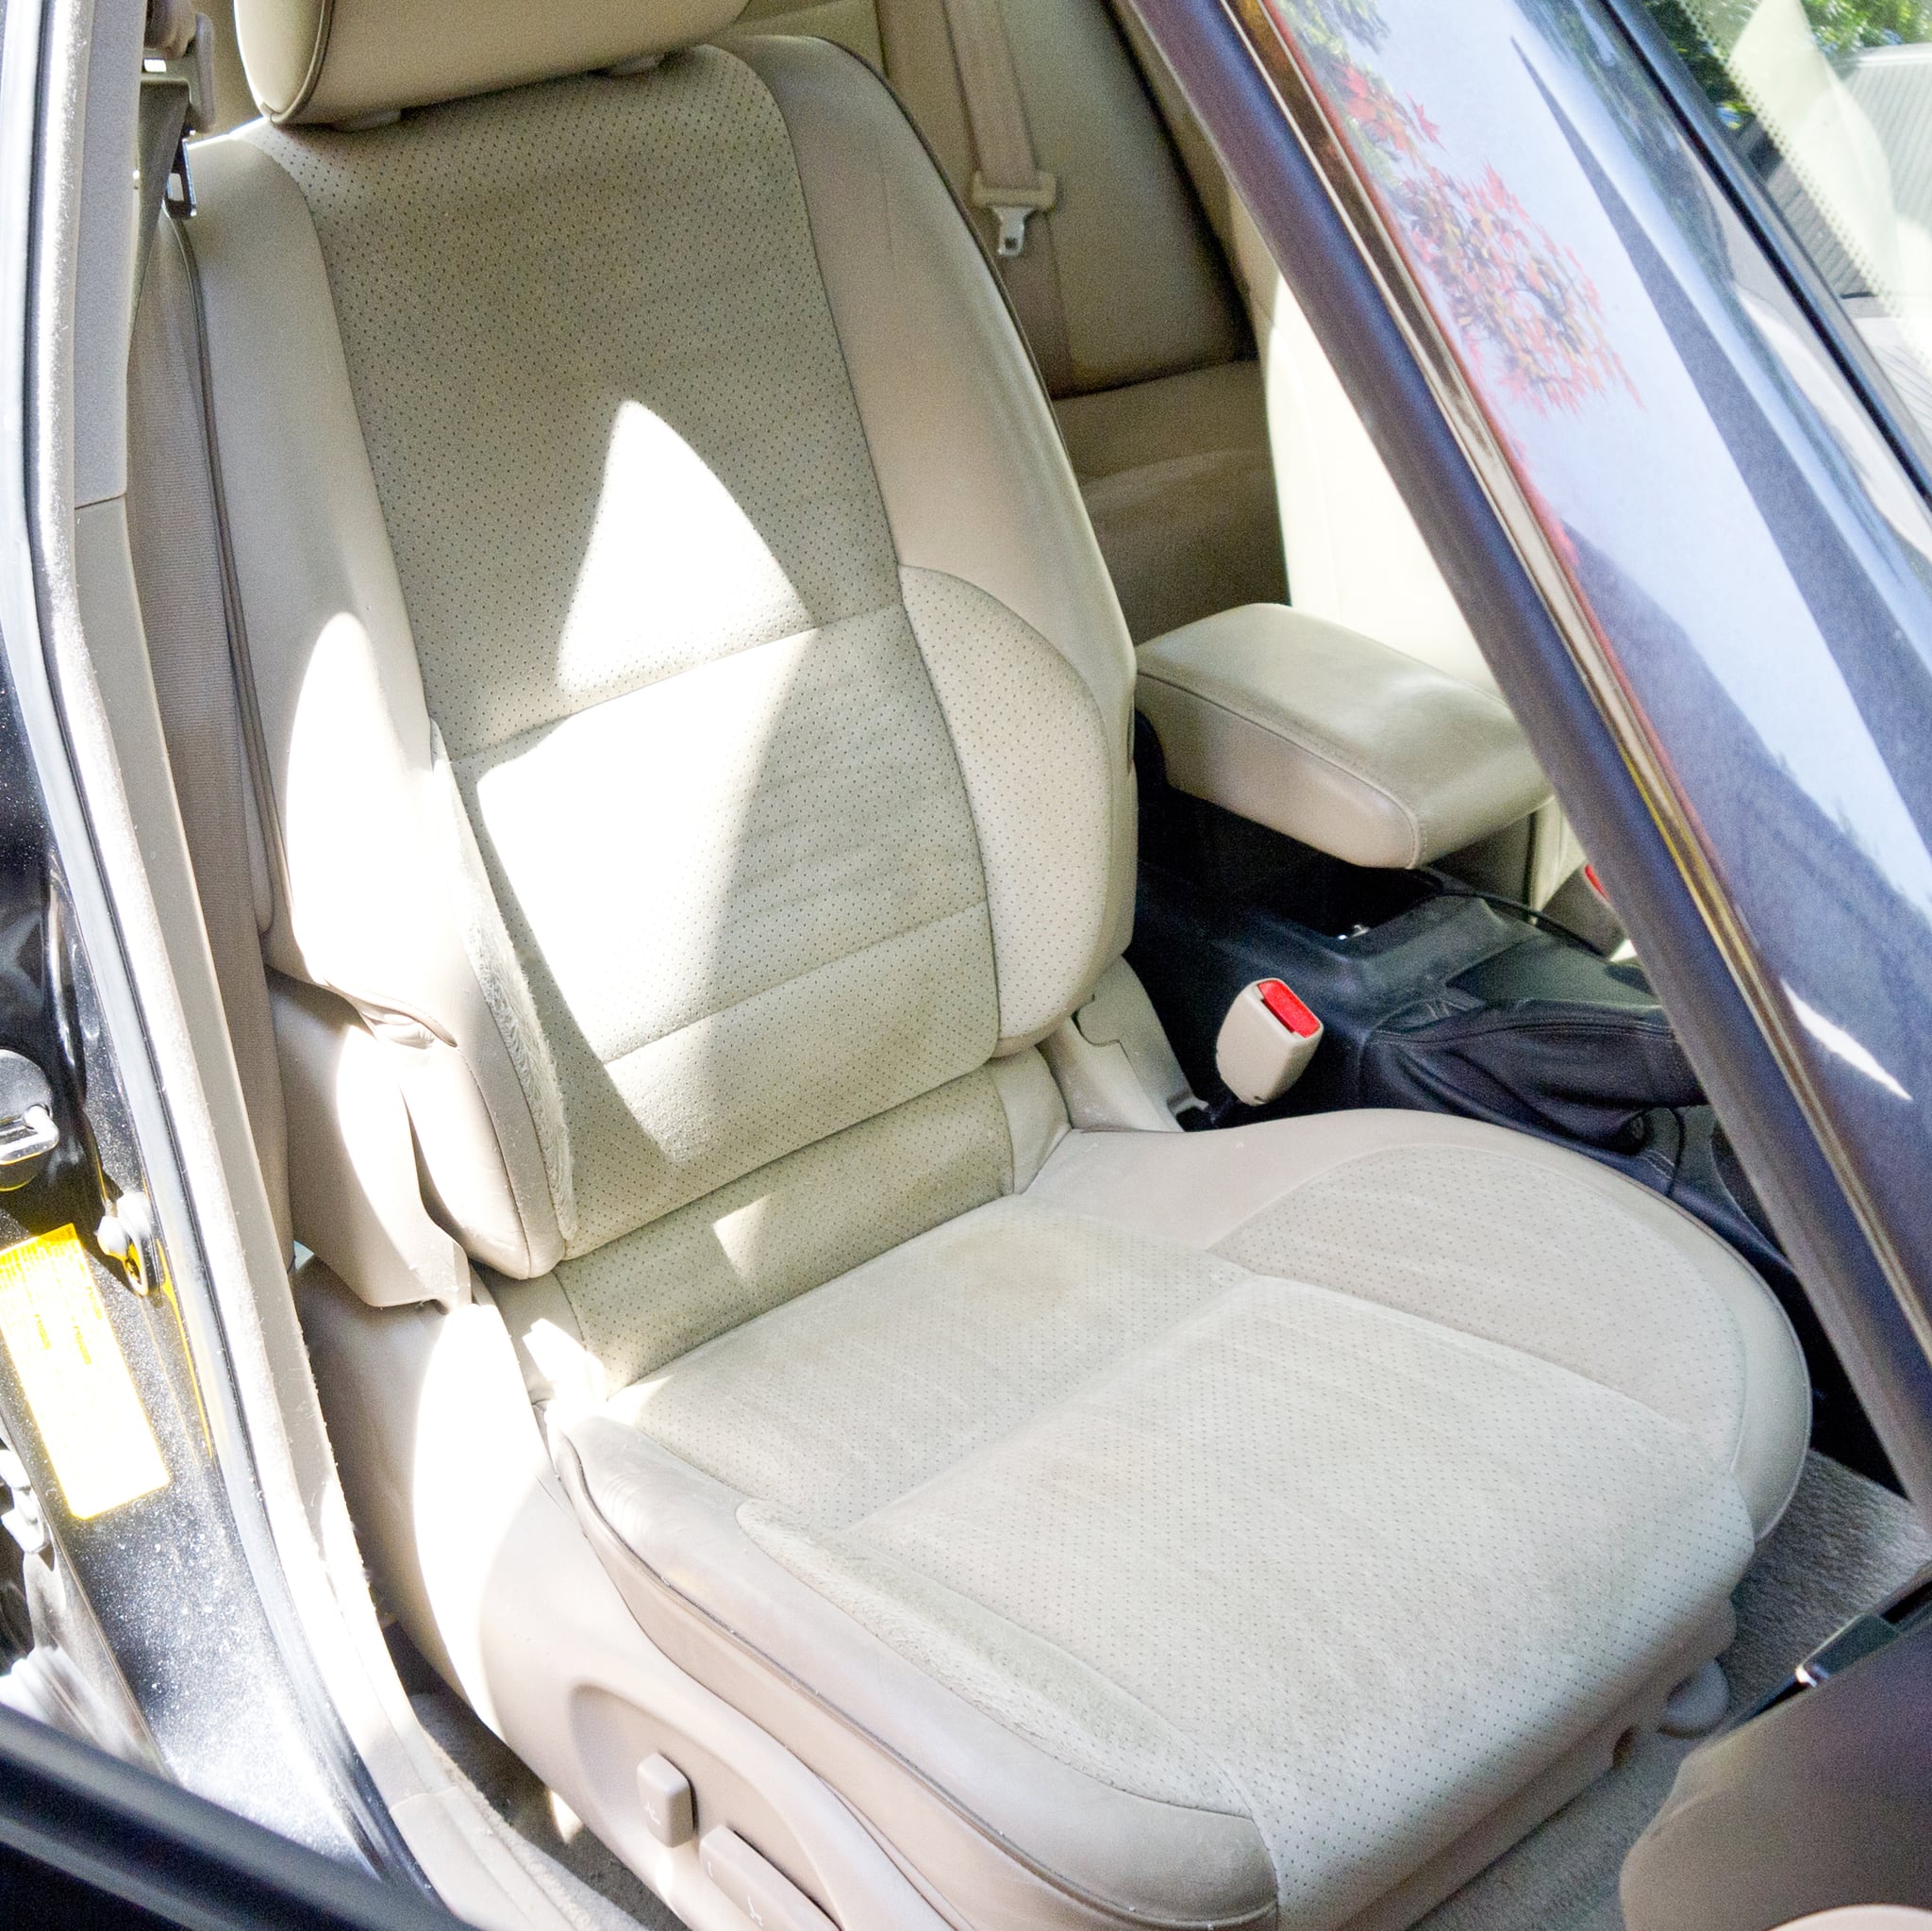 How to Clean Cloth Car Seats | POPSUGAR Smart Living